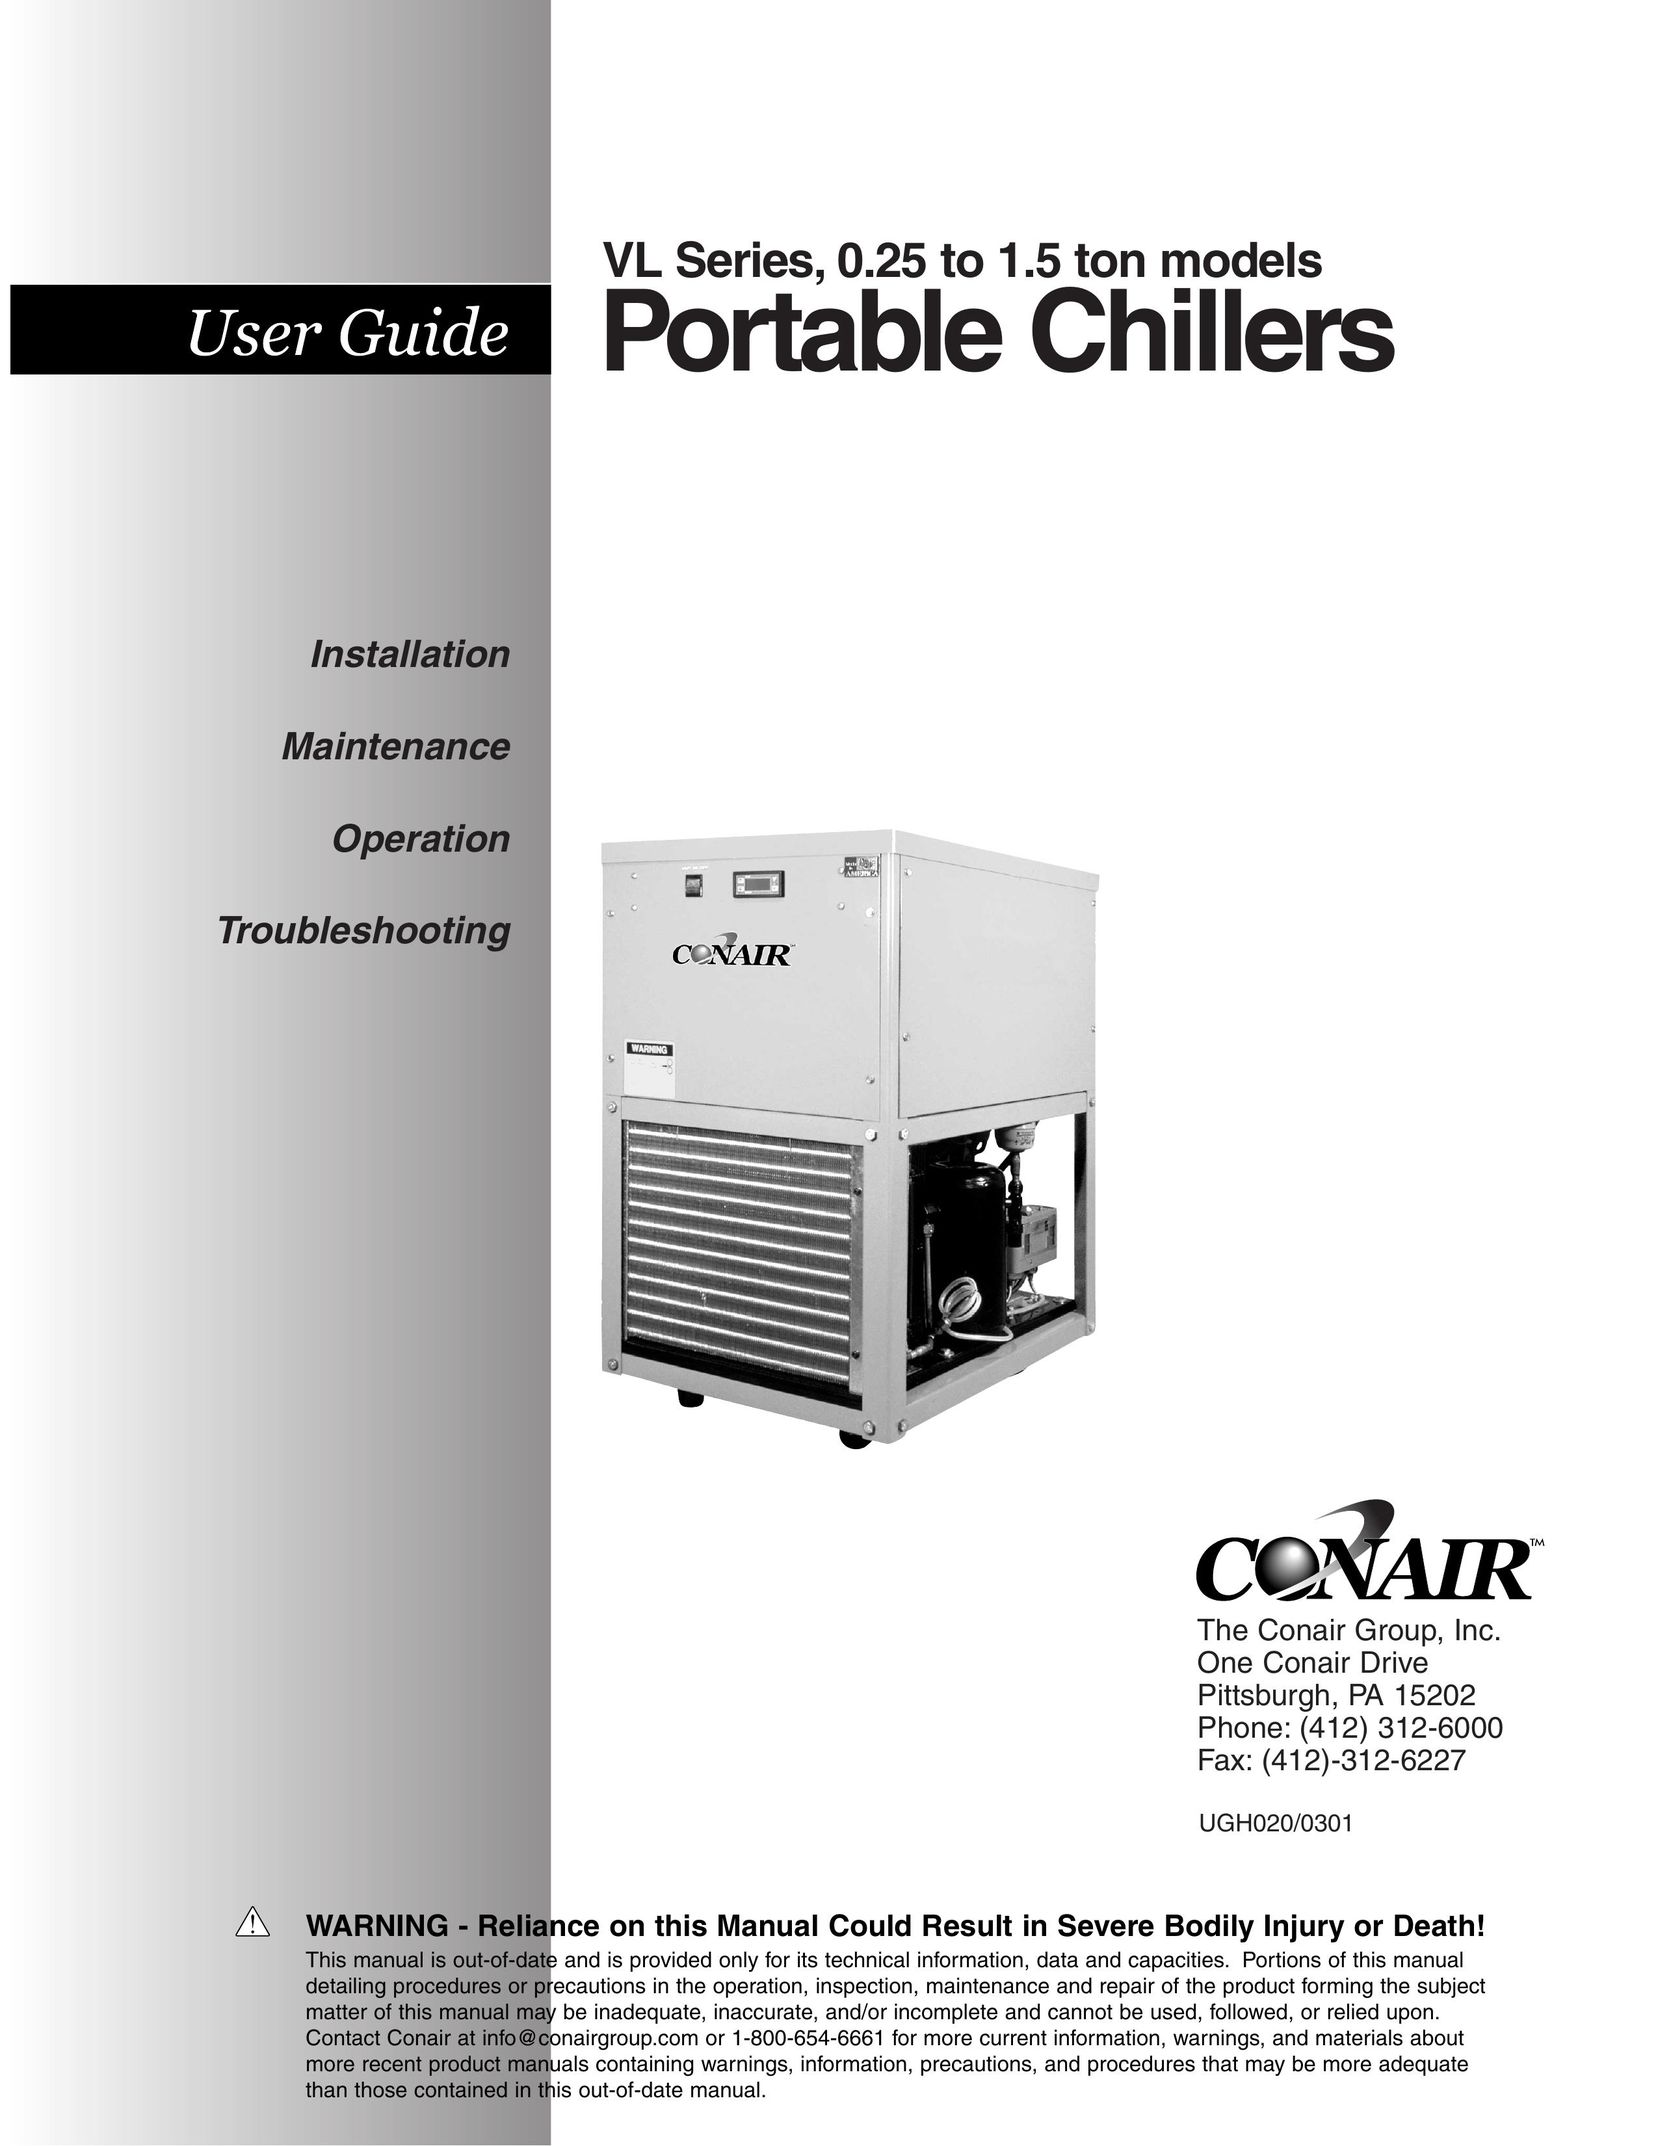 Conair VL Series Air Conditioner User Manual